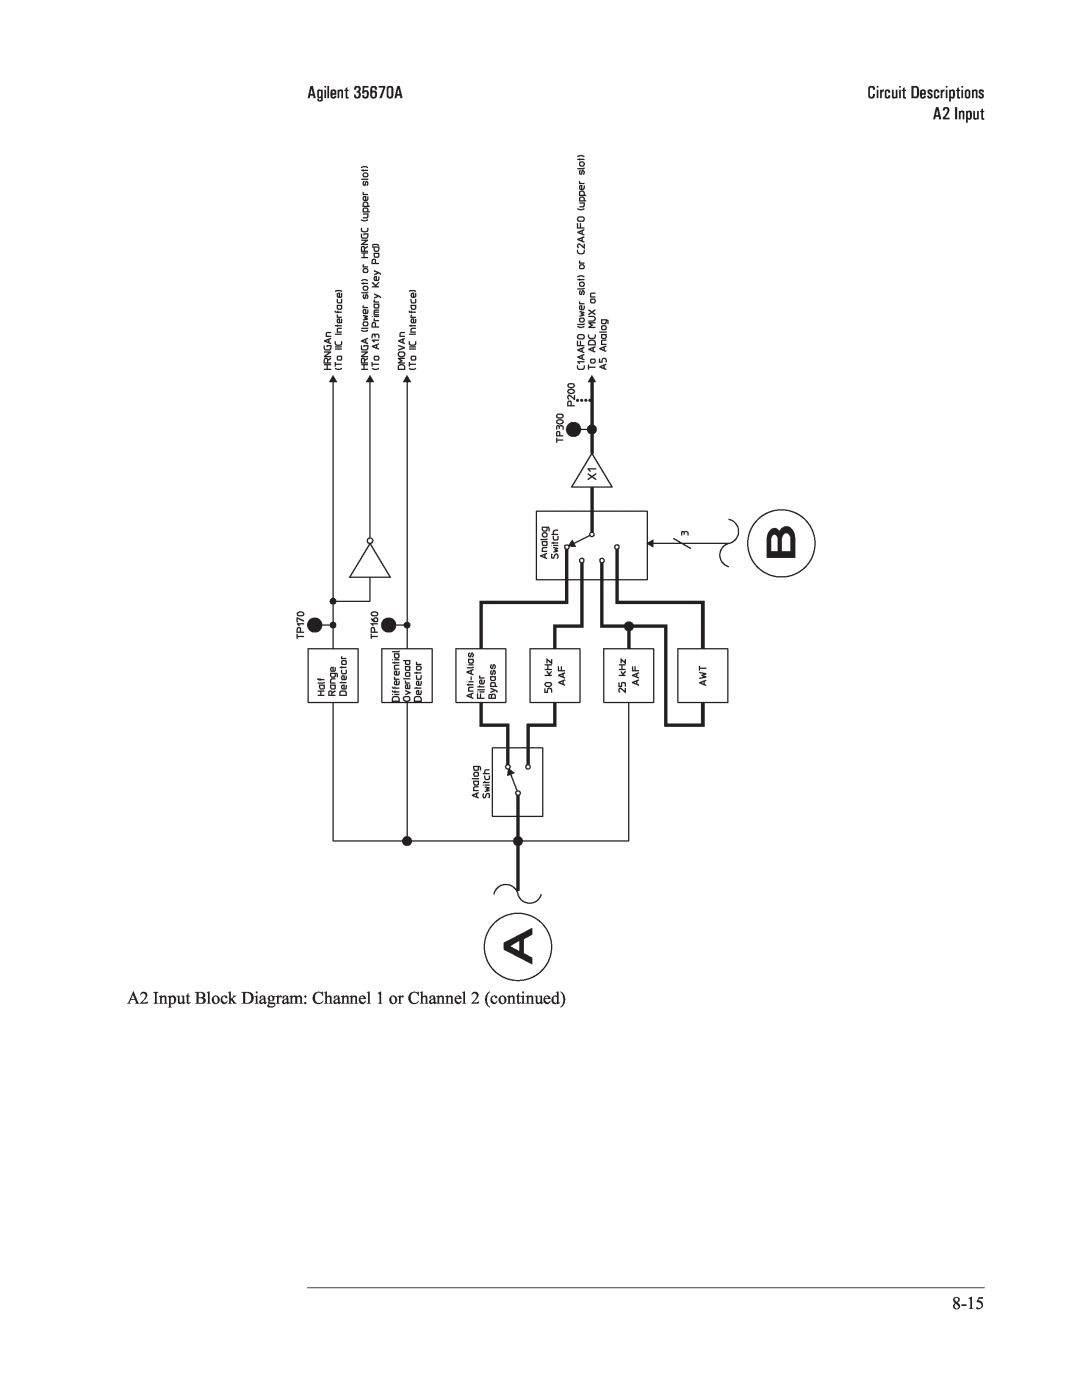 Agilent Technologies 35670-90066 manual Agilent 35670A, Circuit Descriptions, A2 Input 